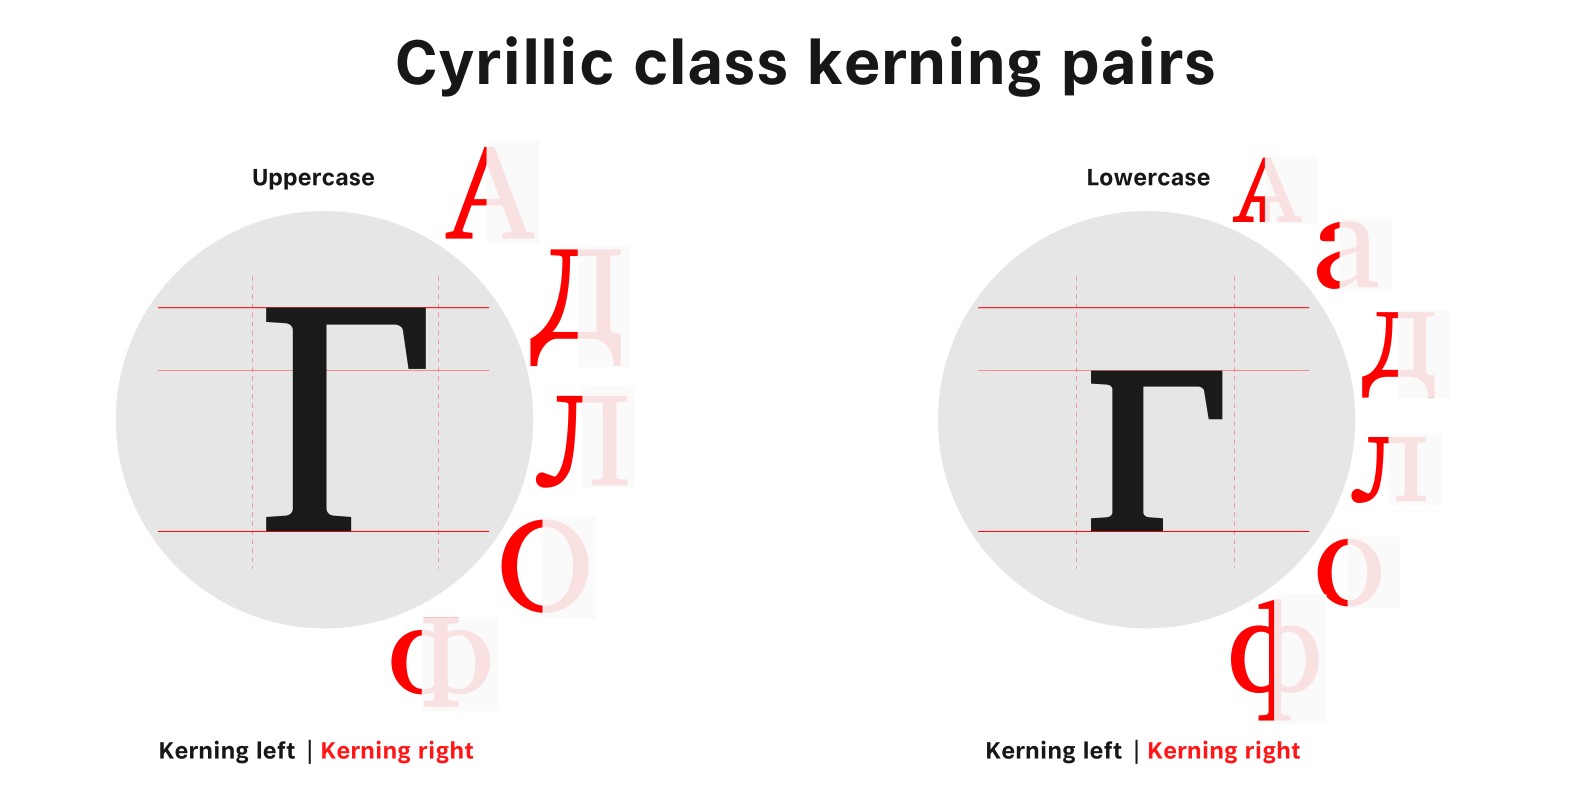 Cyrillic kerning pairs for Гг